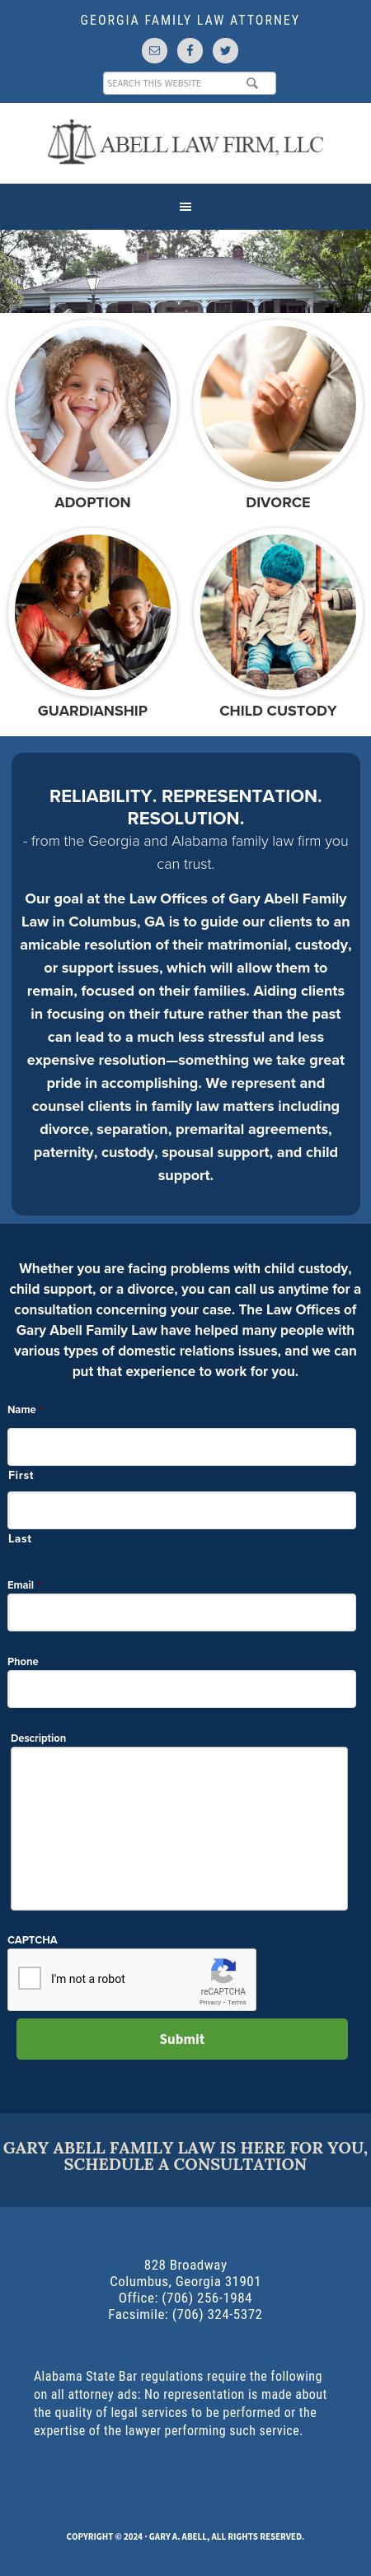 Abell Gary A. - Columbus GA Lawyers